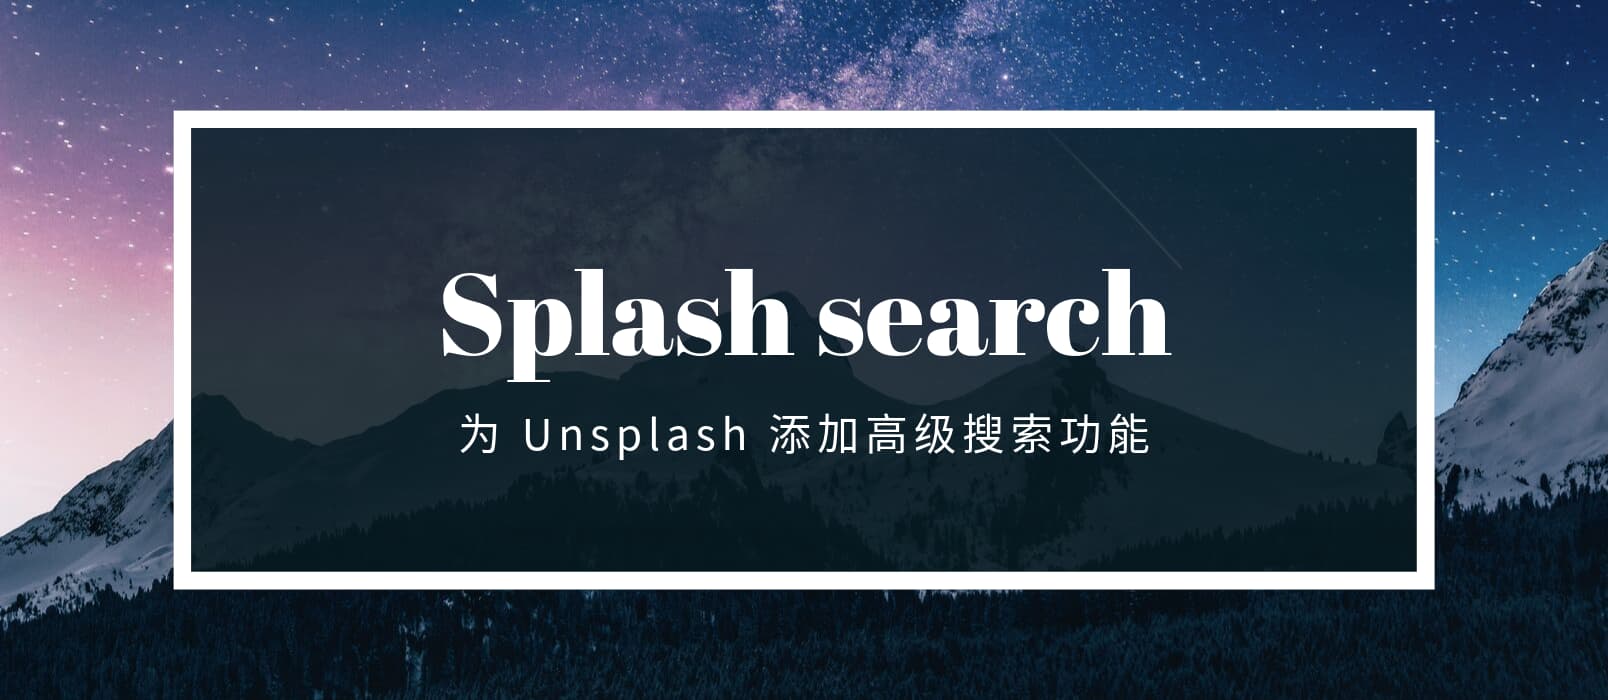 Splash search - Unsplash 高级搜索扩展，可根据方向、颜色、亮度过滤结果[Chrome] 1